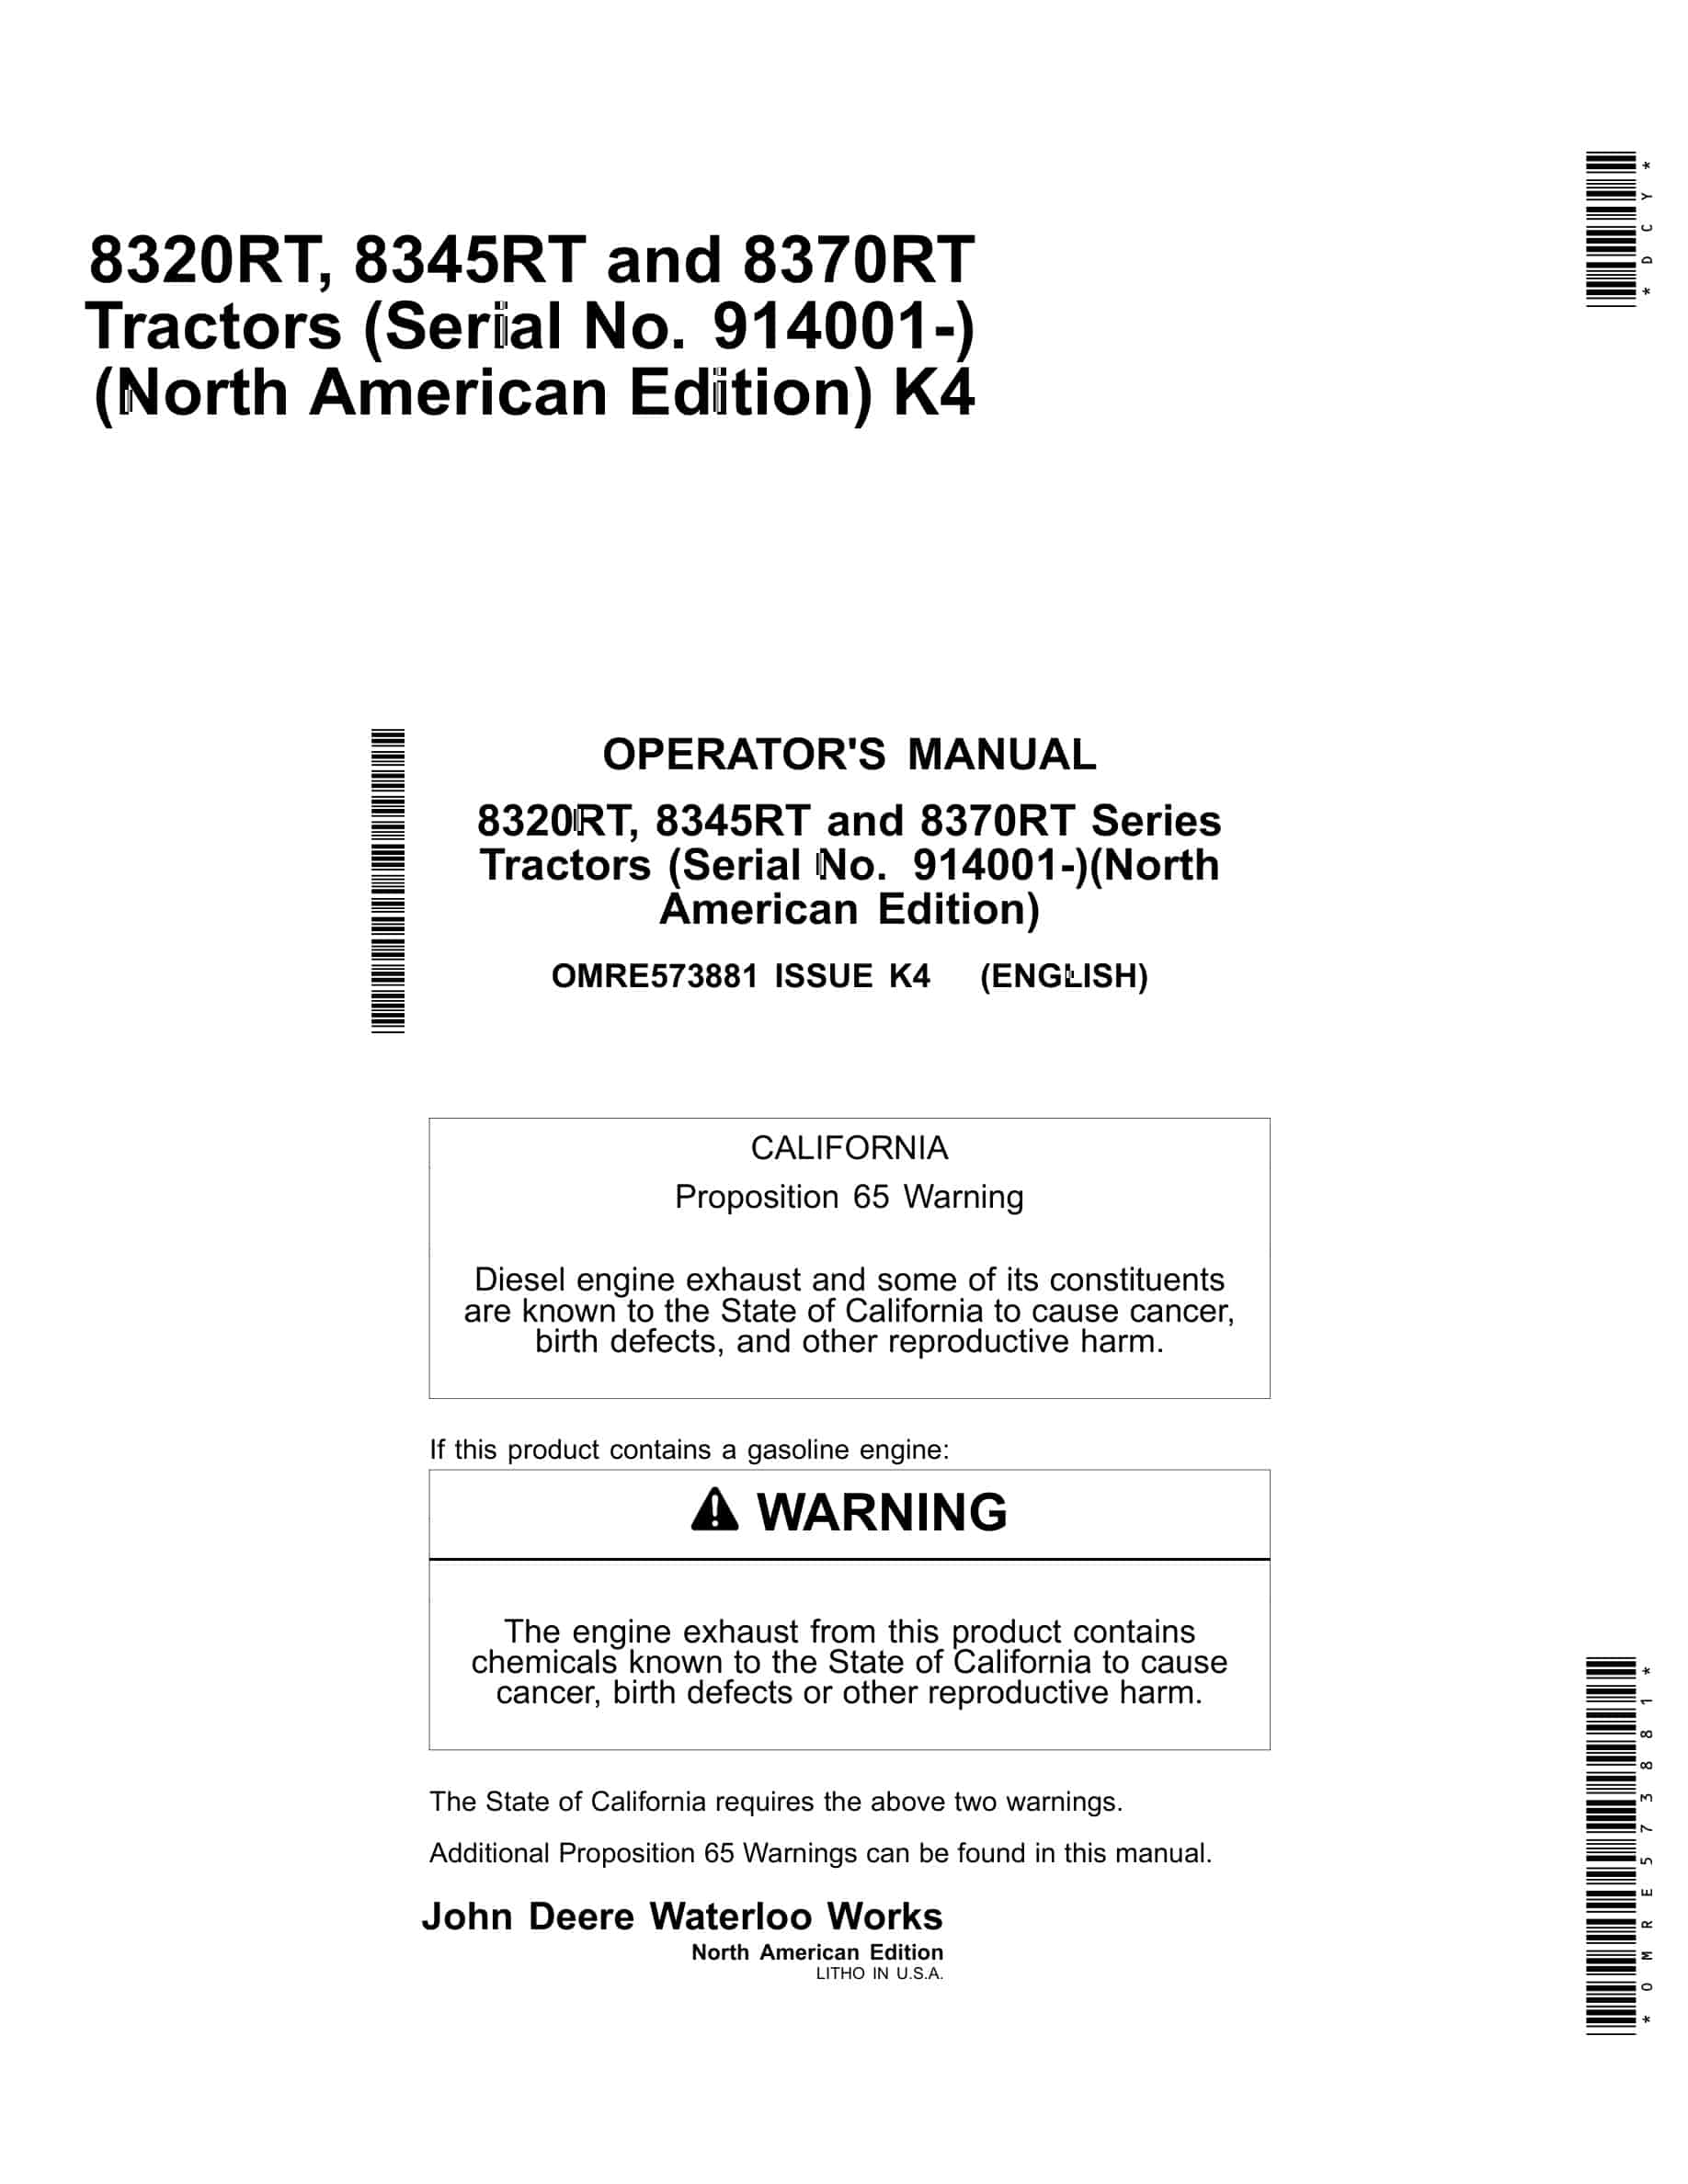 John Deere 8320RT, 8345RT and 8370RT Tractor Operator Manual OMRE573881-1